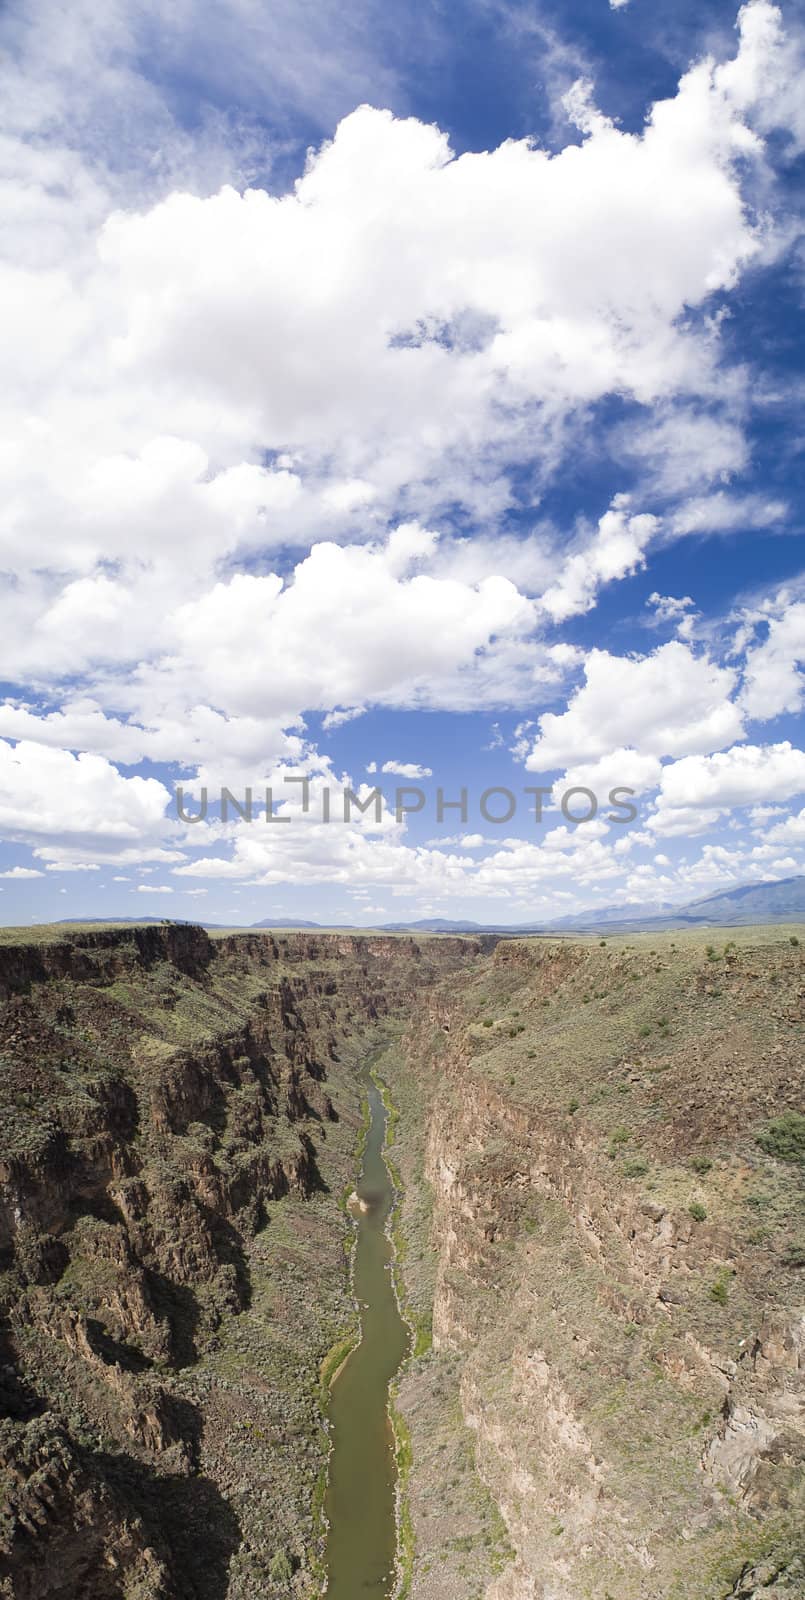 Rio Grande Gorge near Taos New Mexico, USA.